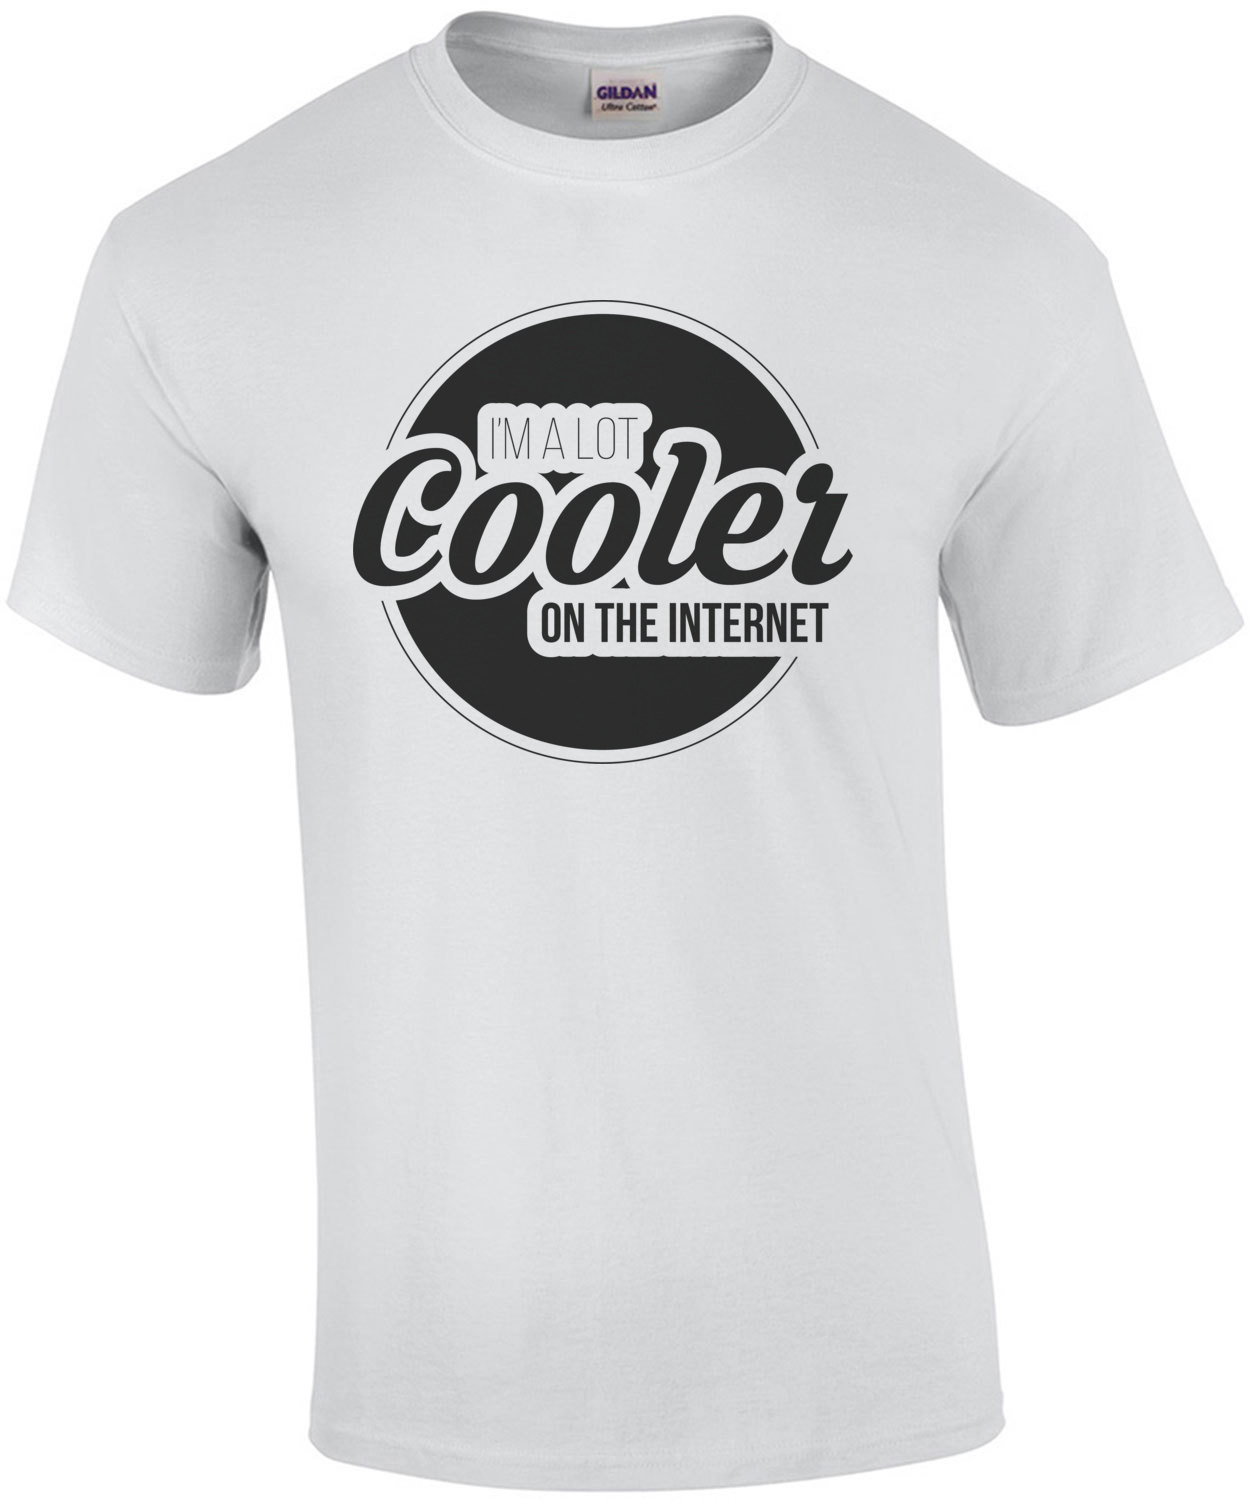 I'm a lot cooler on the internet - internet t-shirt